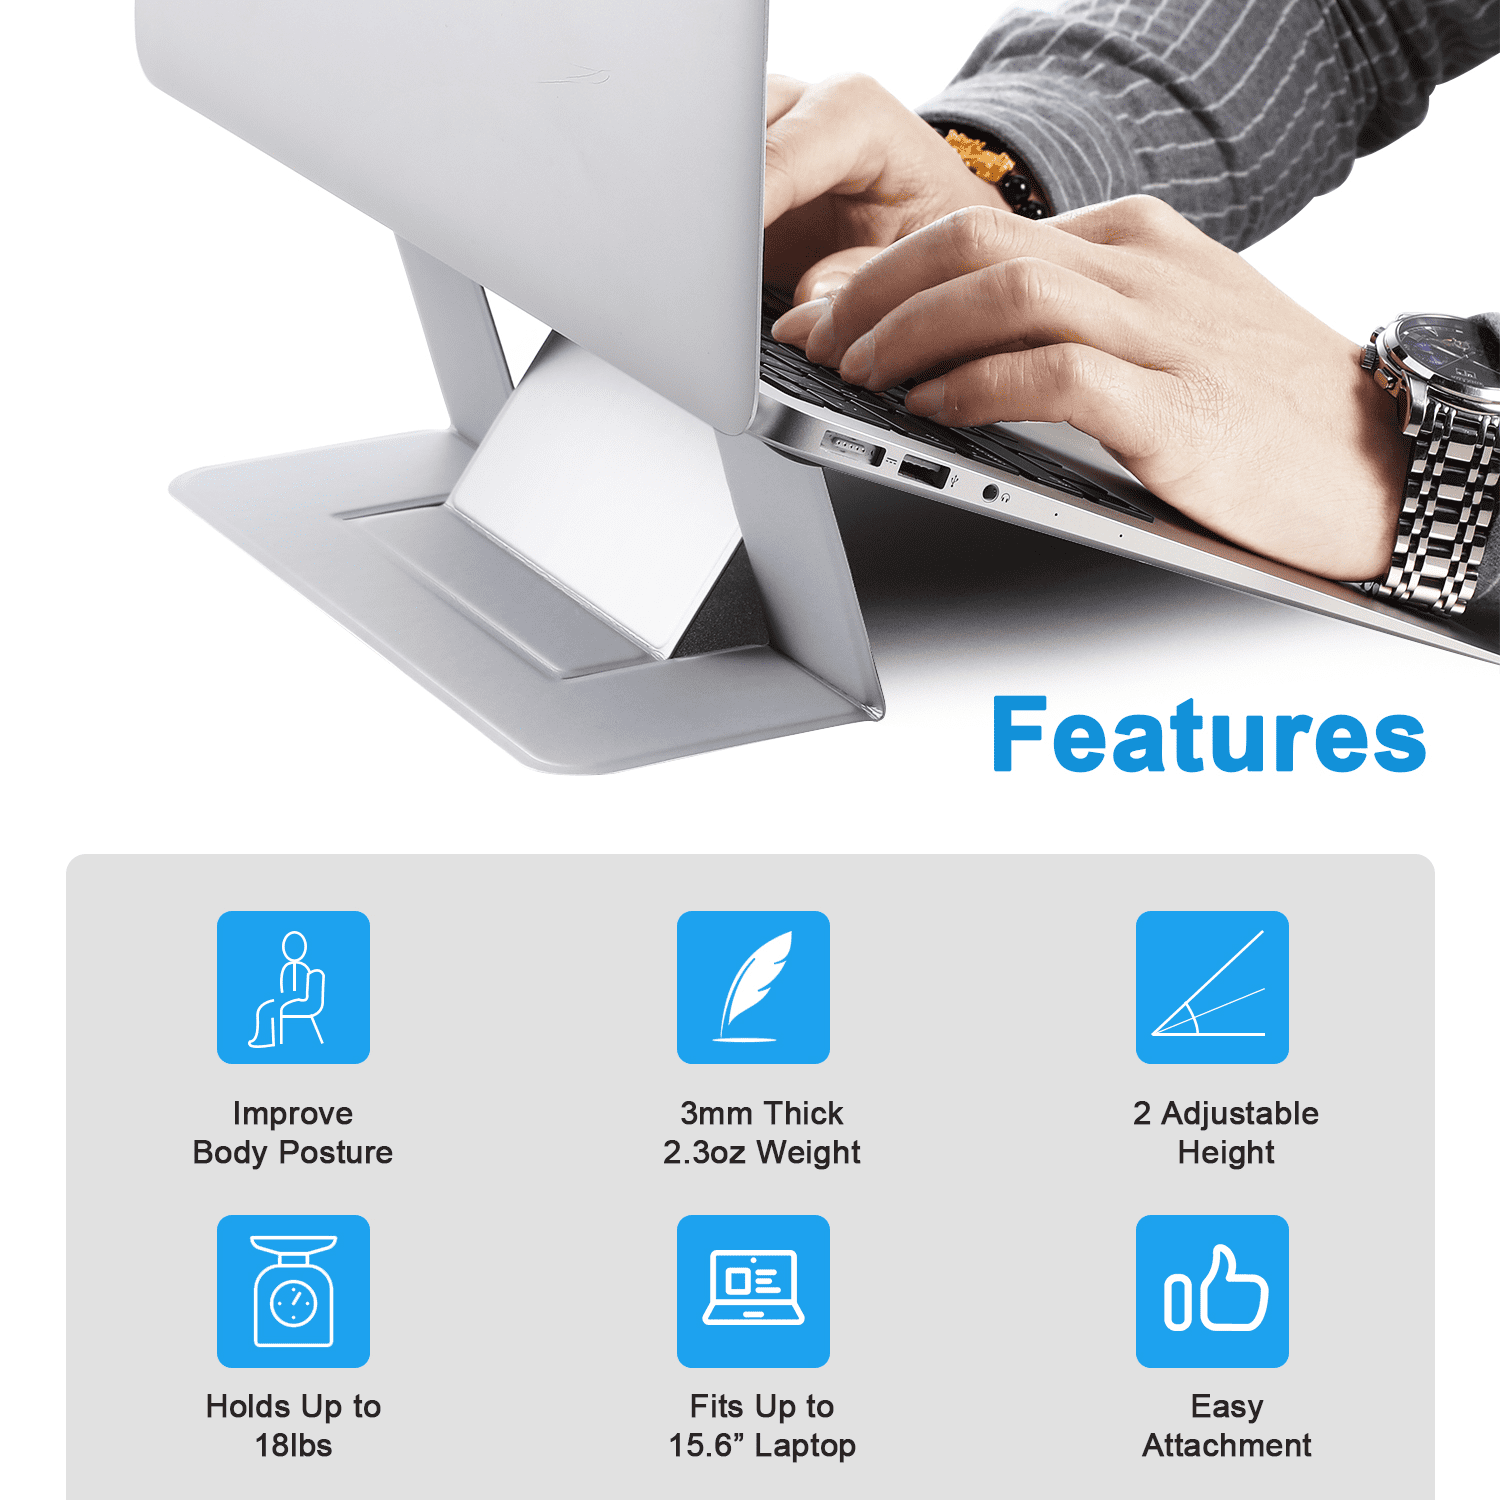 Details about   Adjustable Laptop Stand Folding Portable Desktop iPad Holder Office Support NEW 